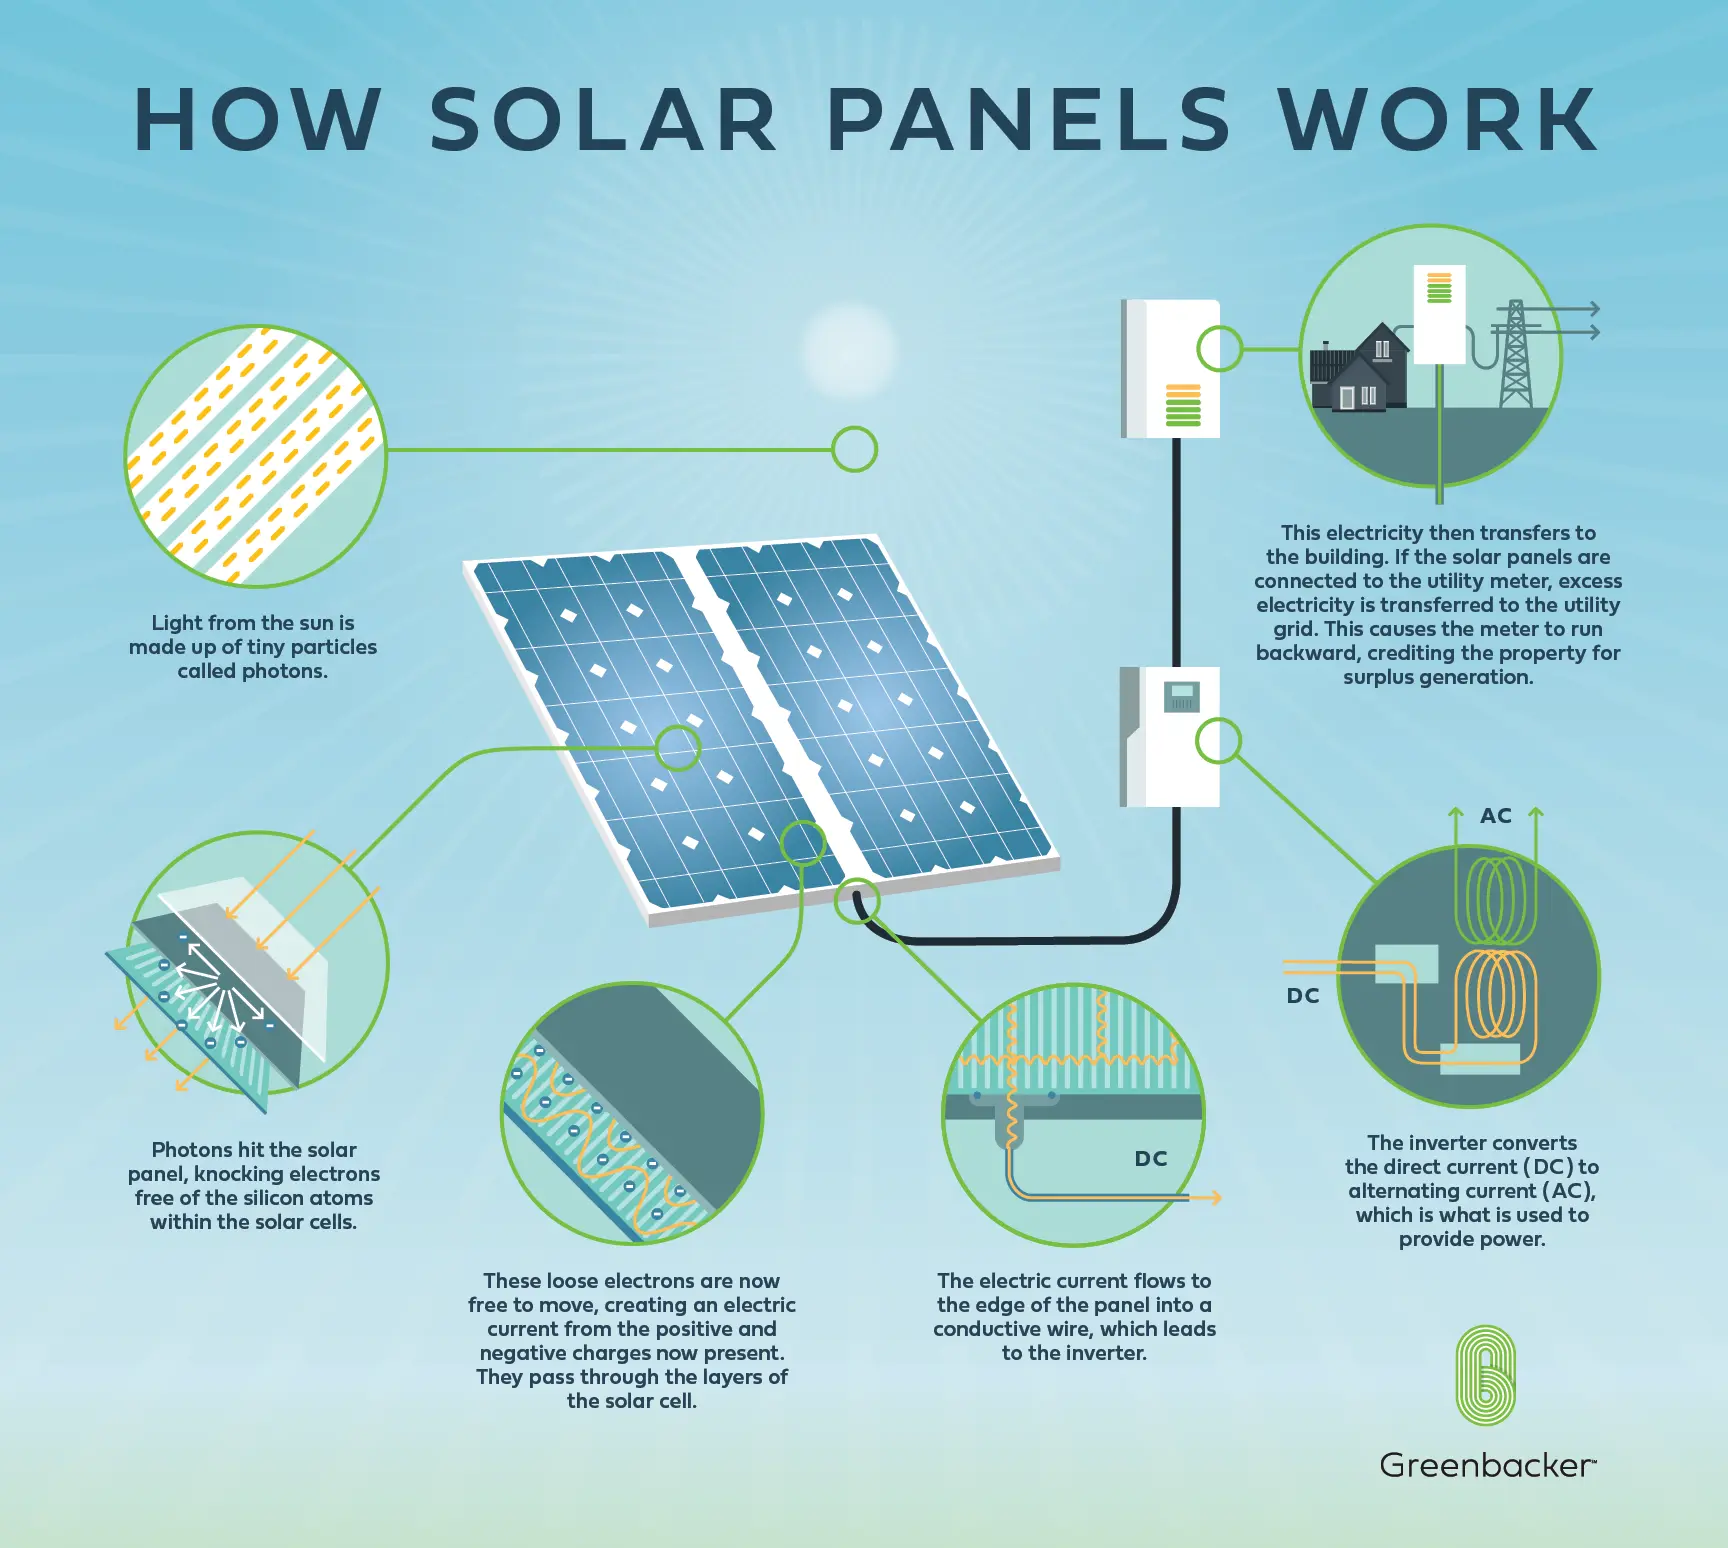 how is solar energy transferred - How does solar energy travel